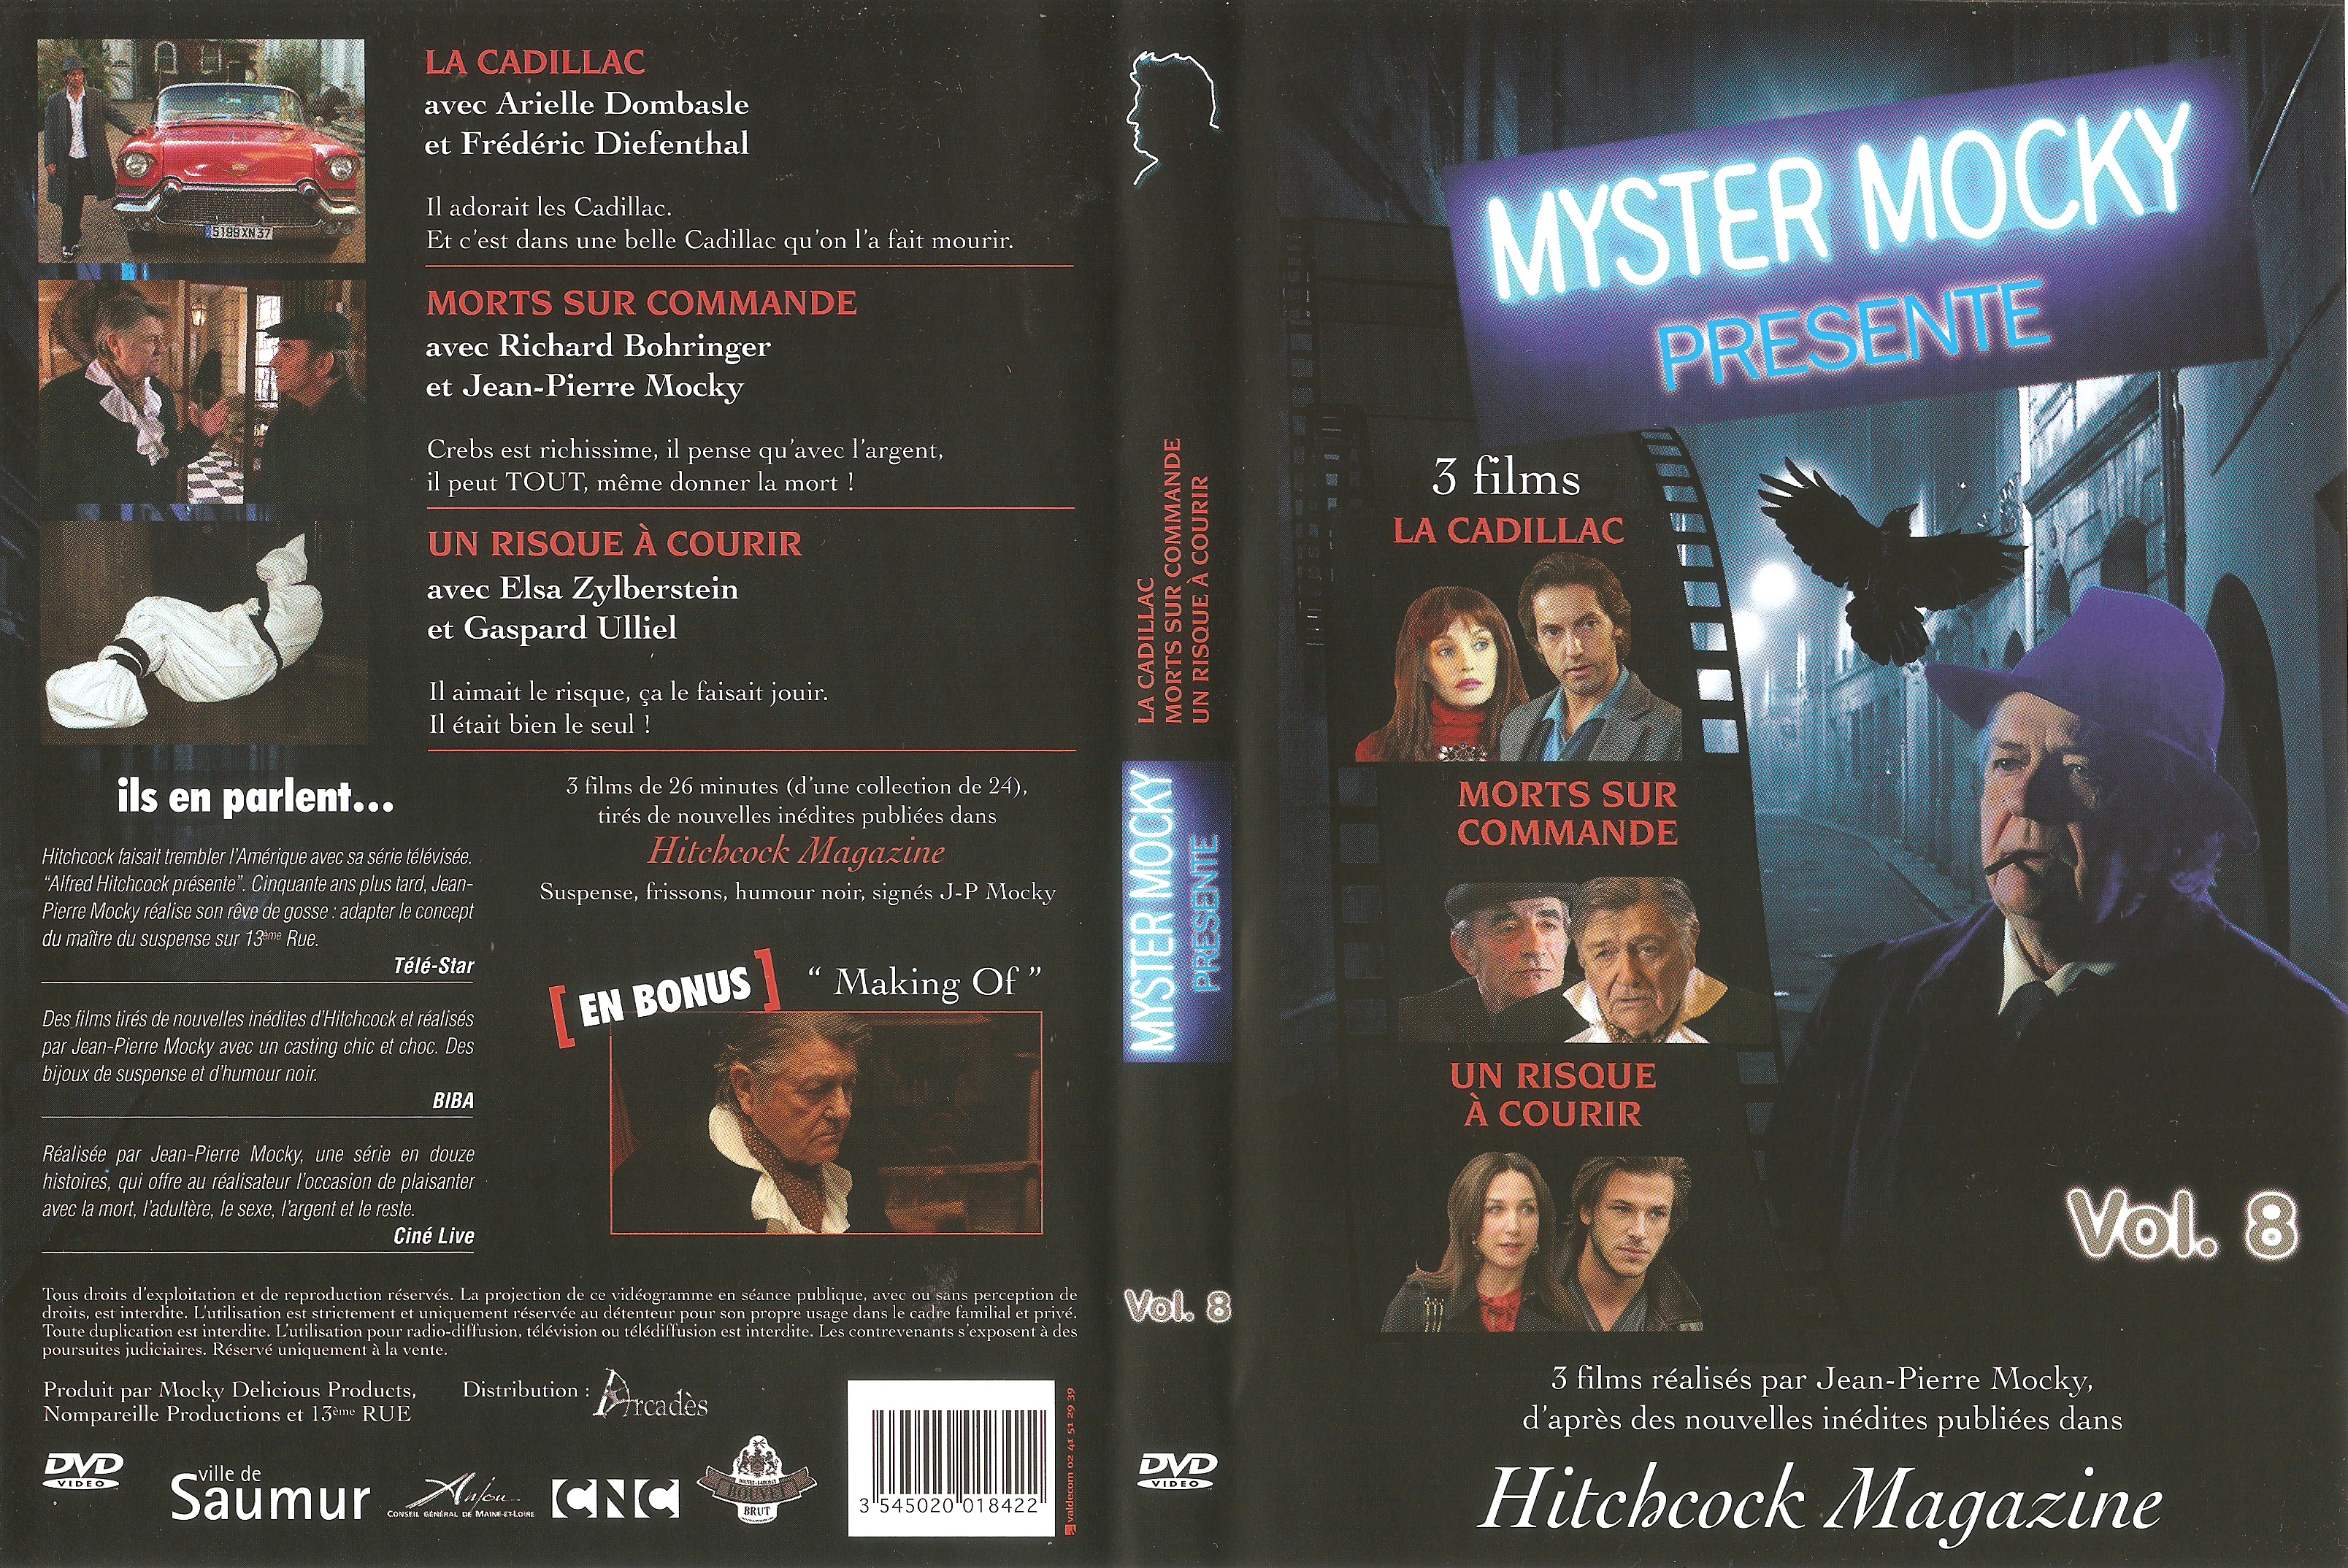 Jaquette DVD Myster Mocky prsente Vol 08